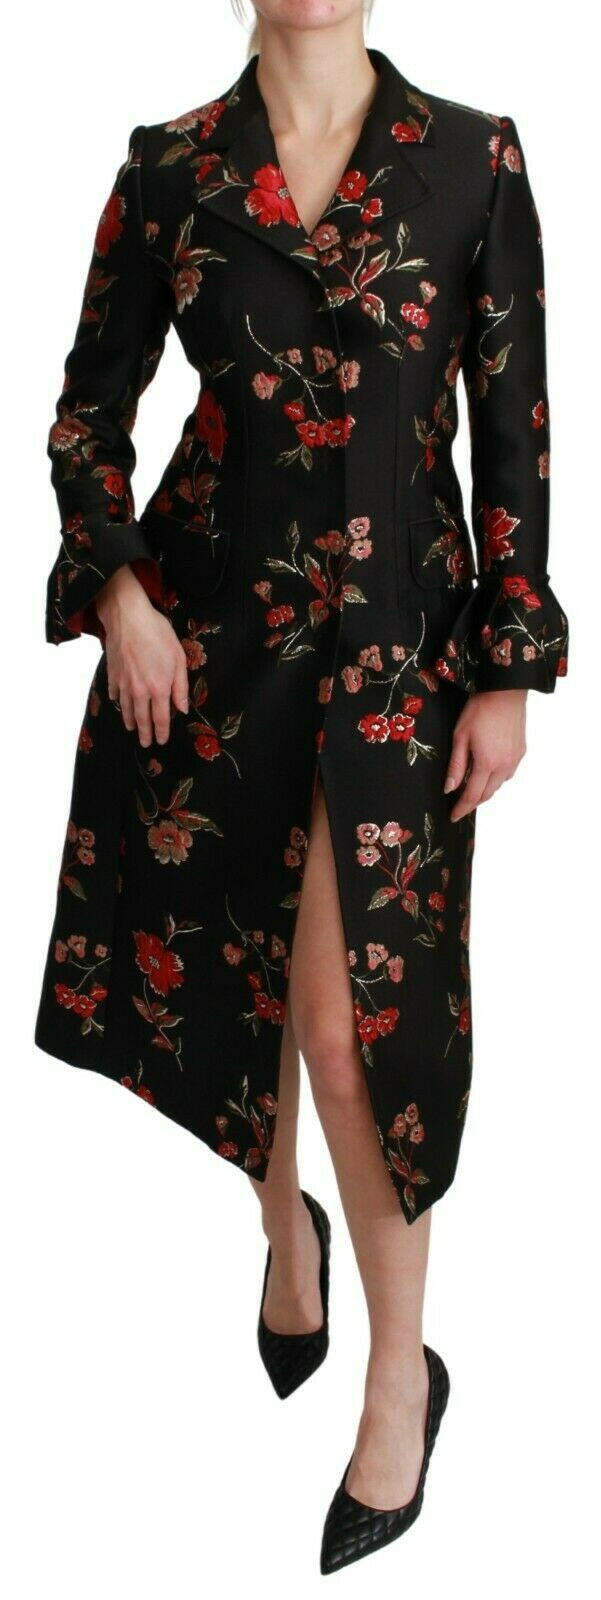 Dolce & Gabbana Black Floral Embroidered Jacket Coat - GENUINE AUTHENTIC BRAND LLC  